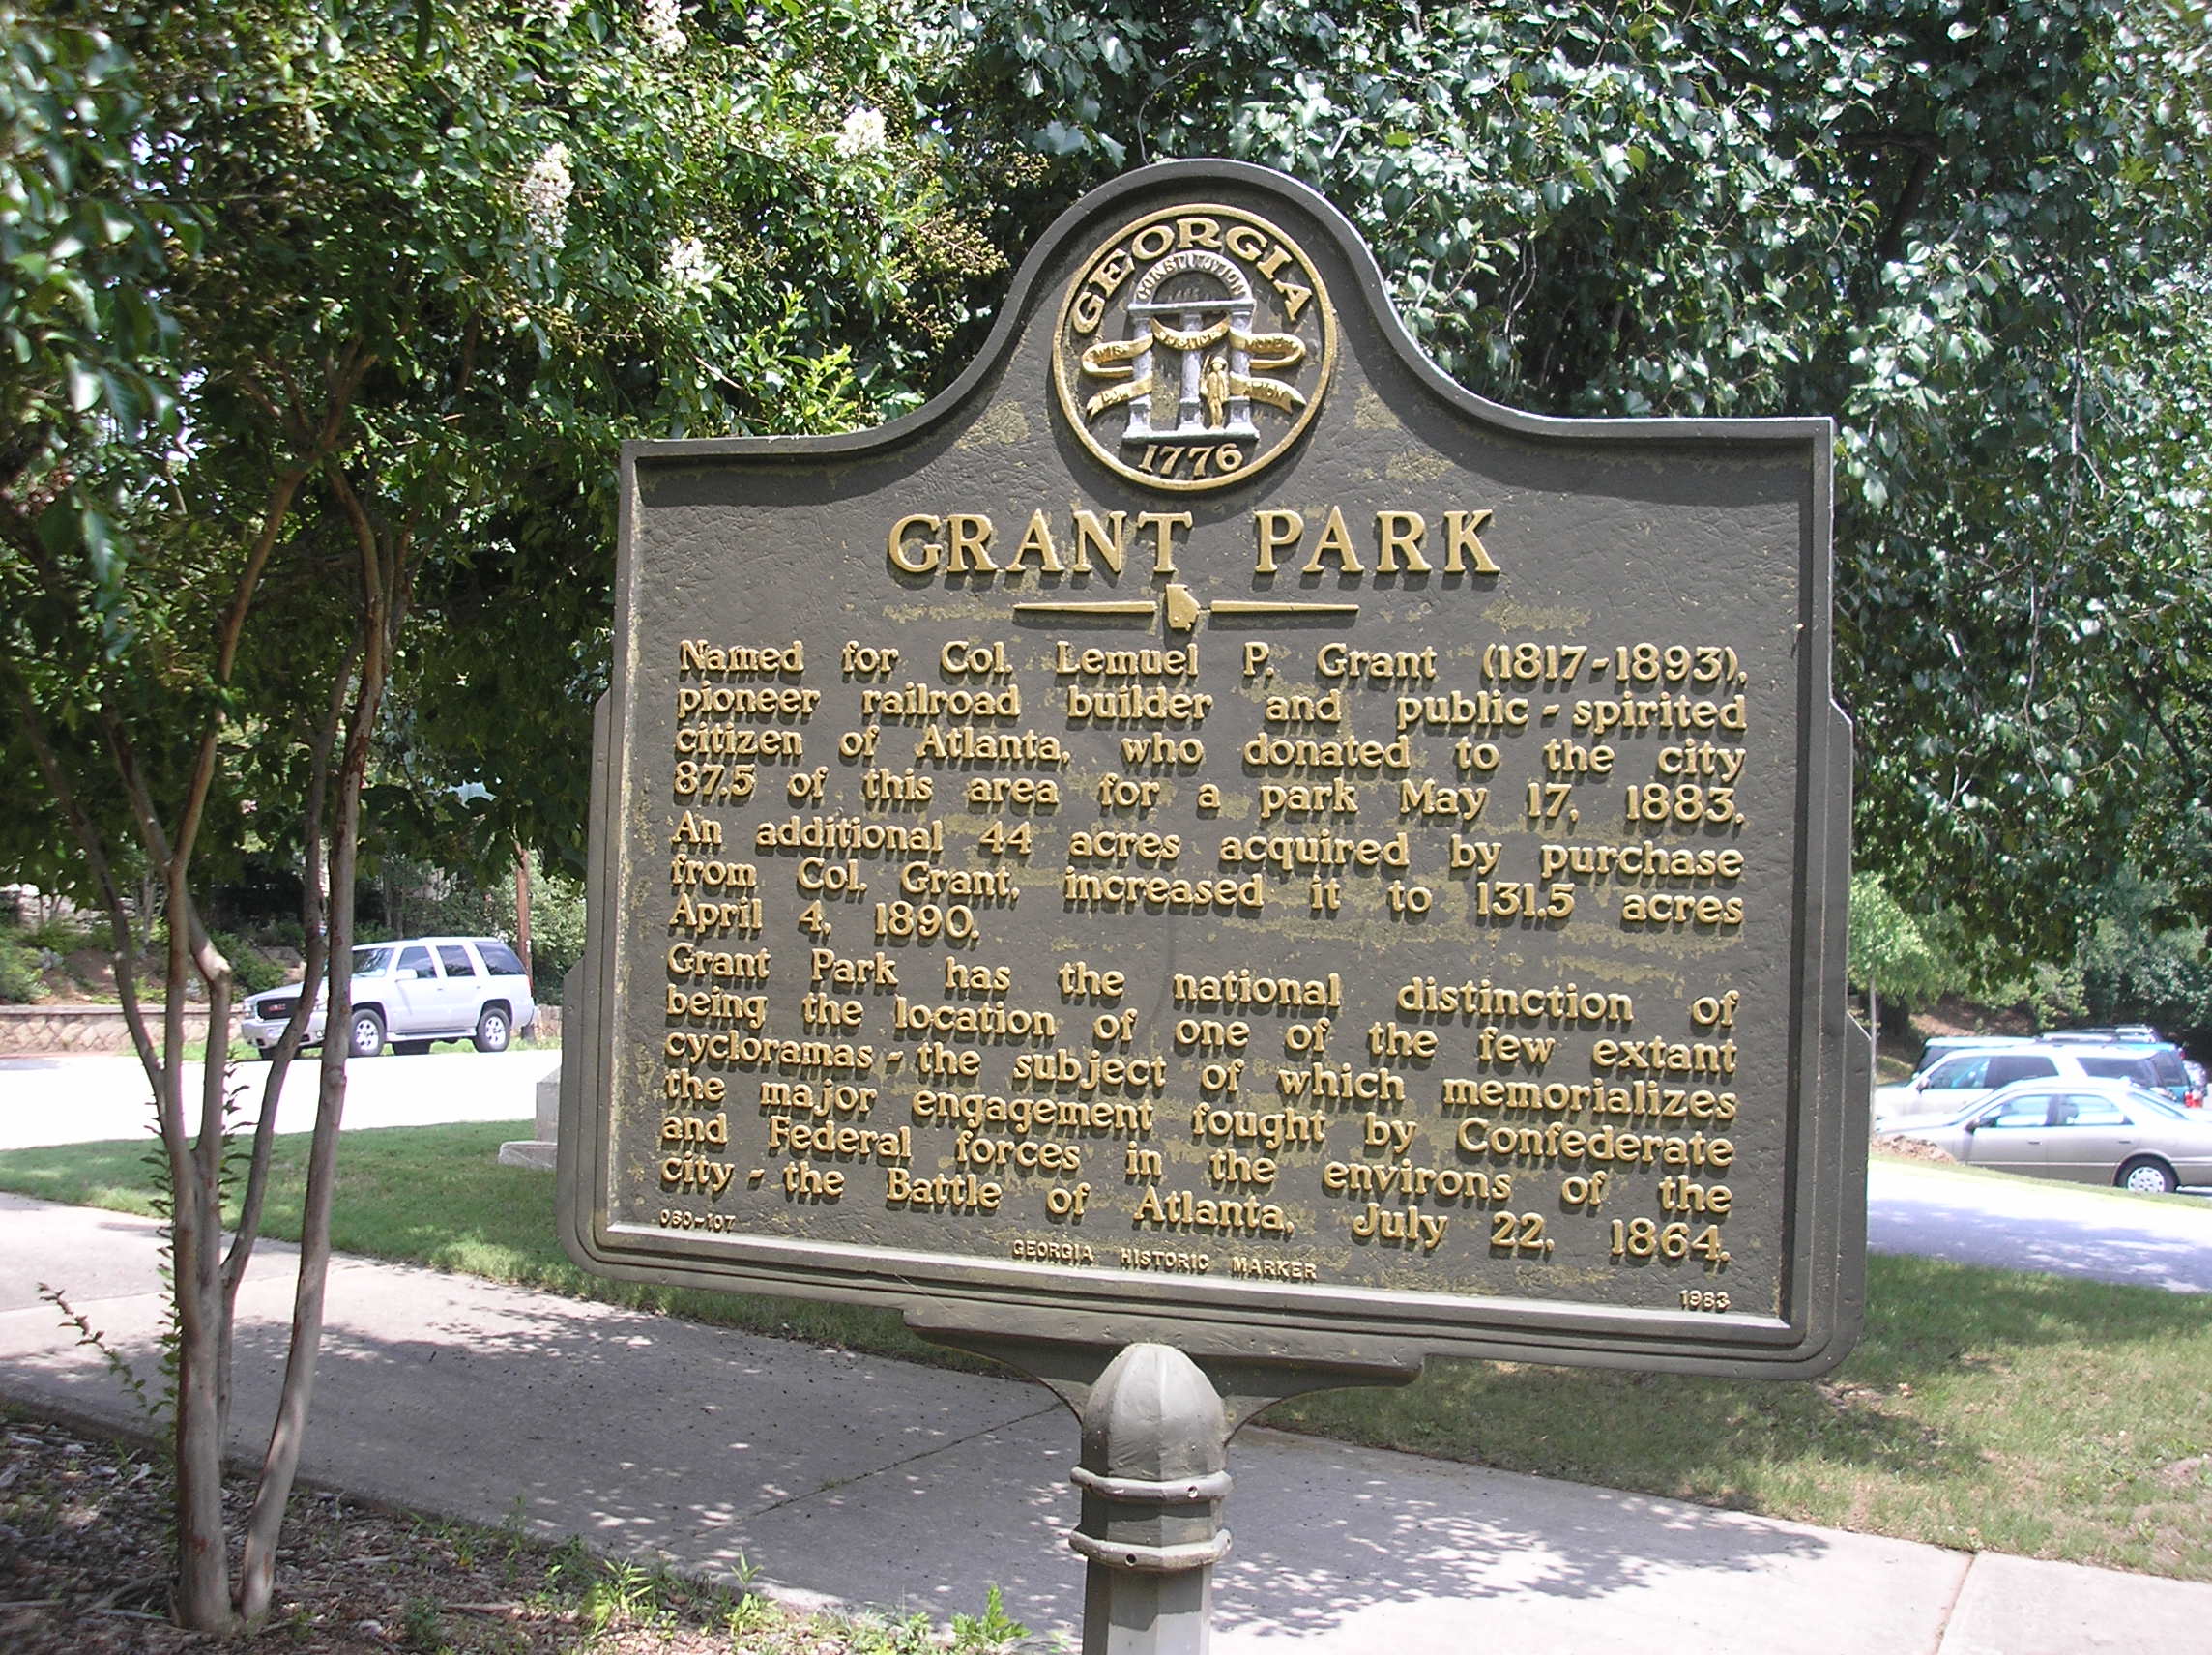 Civil War Blog » Grant Park and the Atlanta Cyclorama